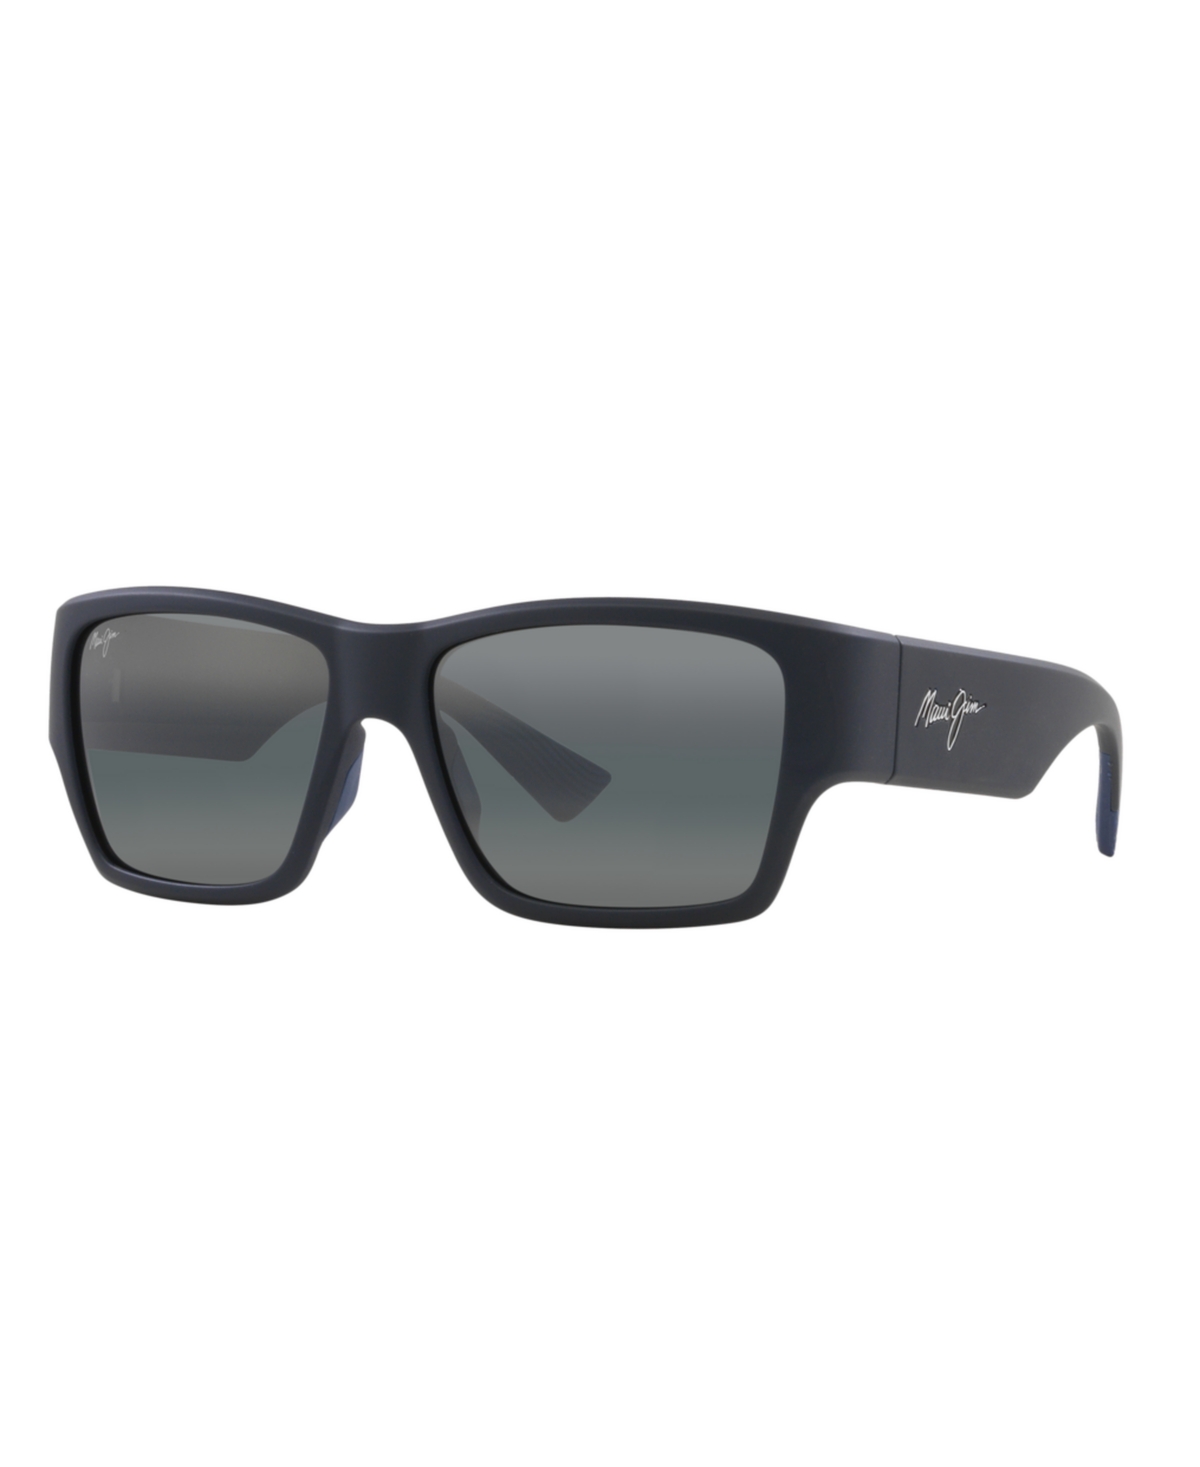 Men's Polarized Sunglasses, Kaolu - Matte Blue